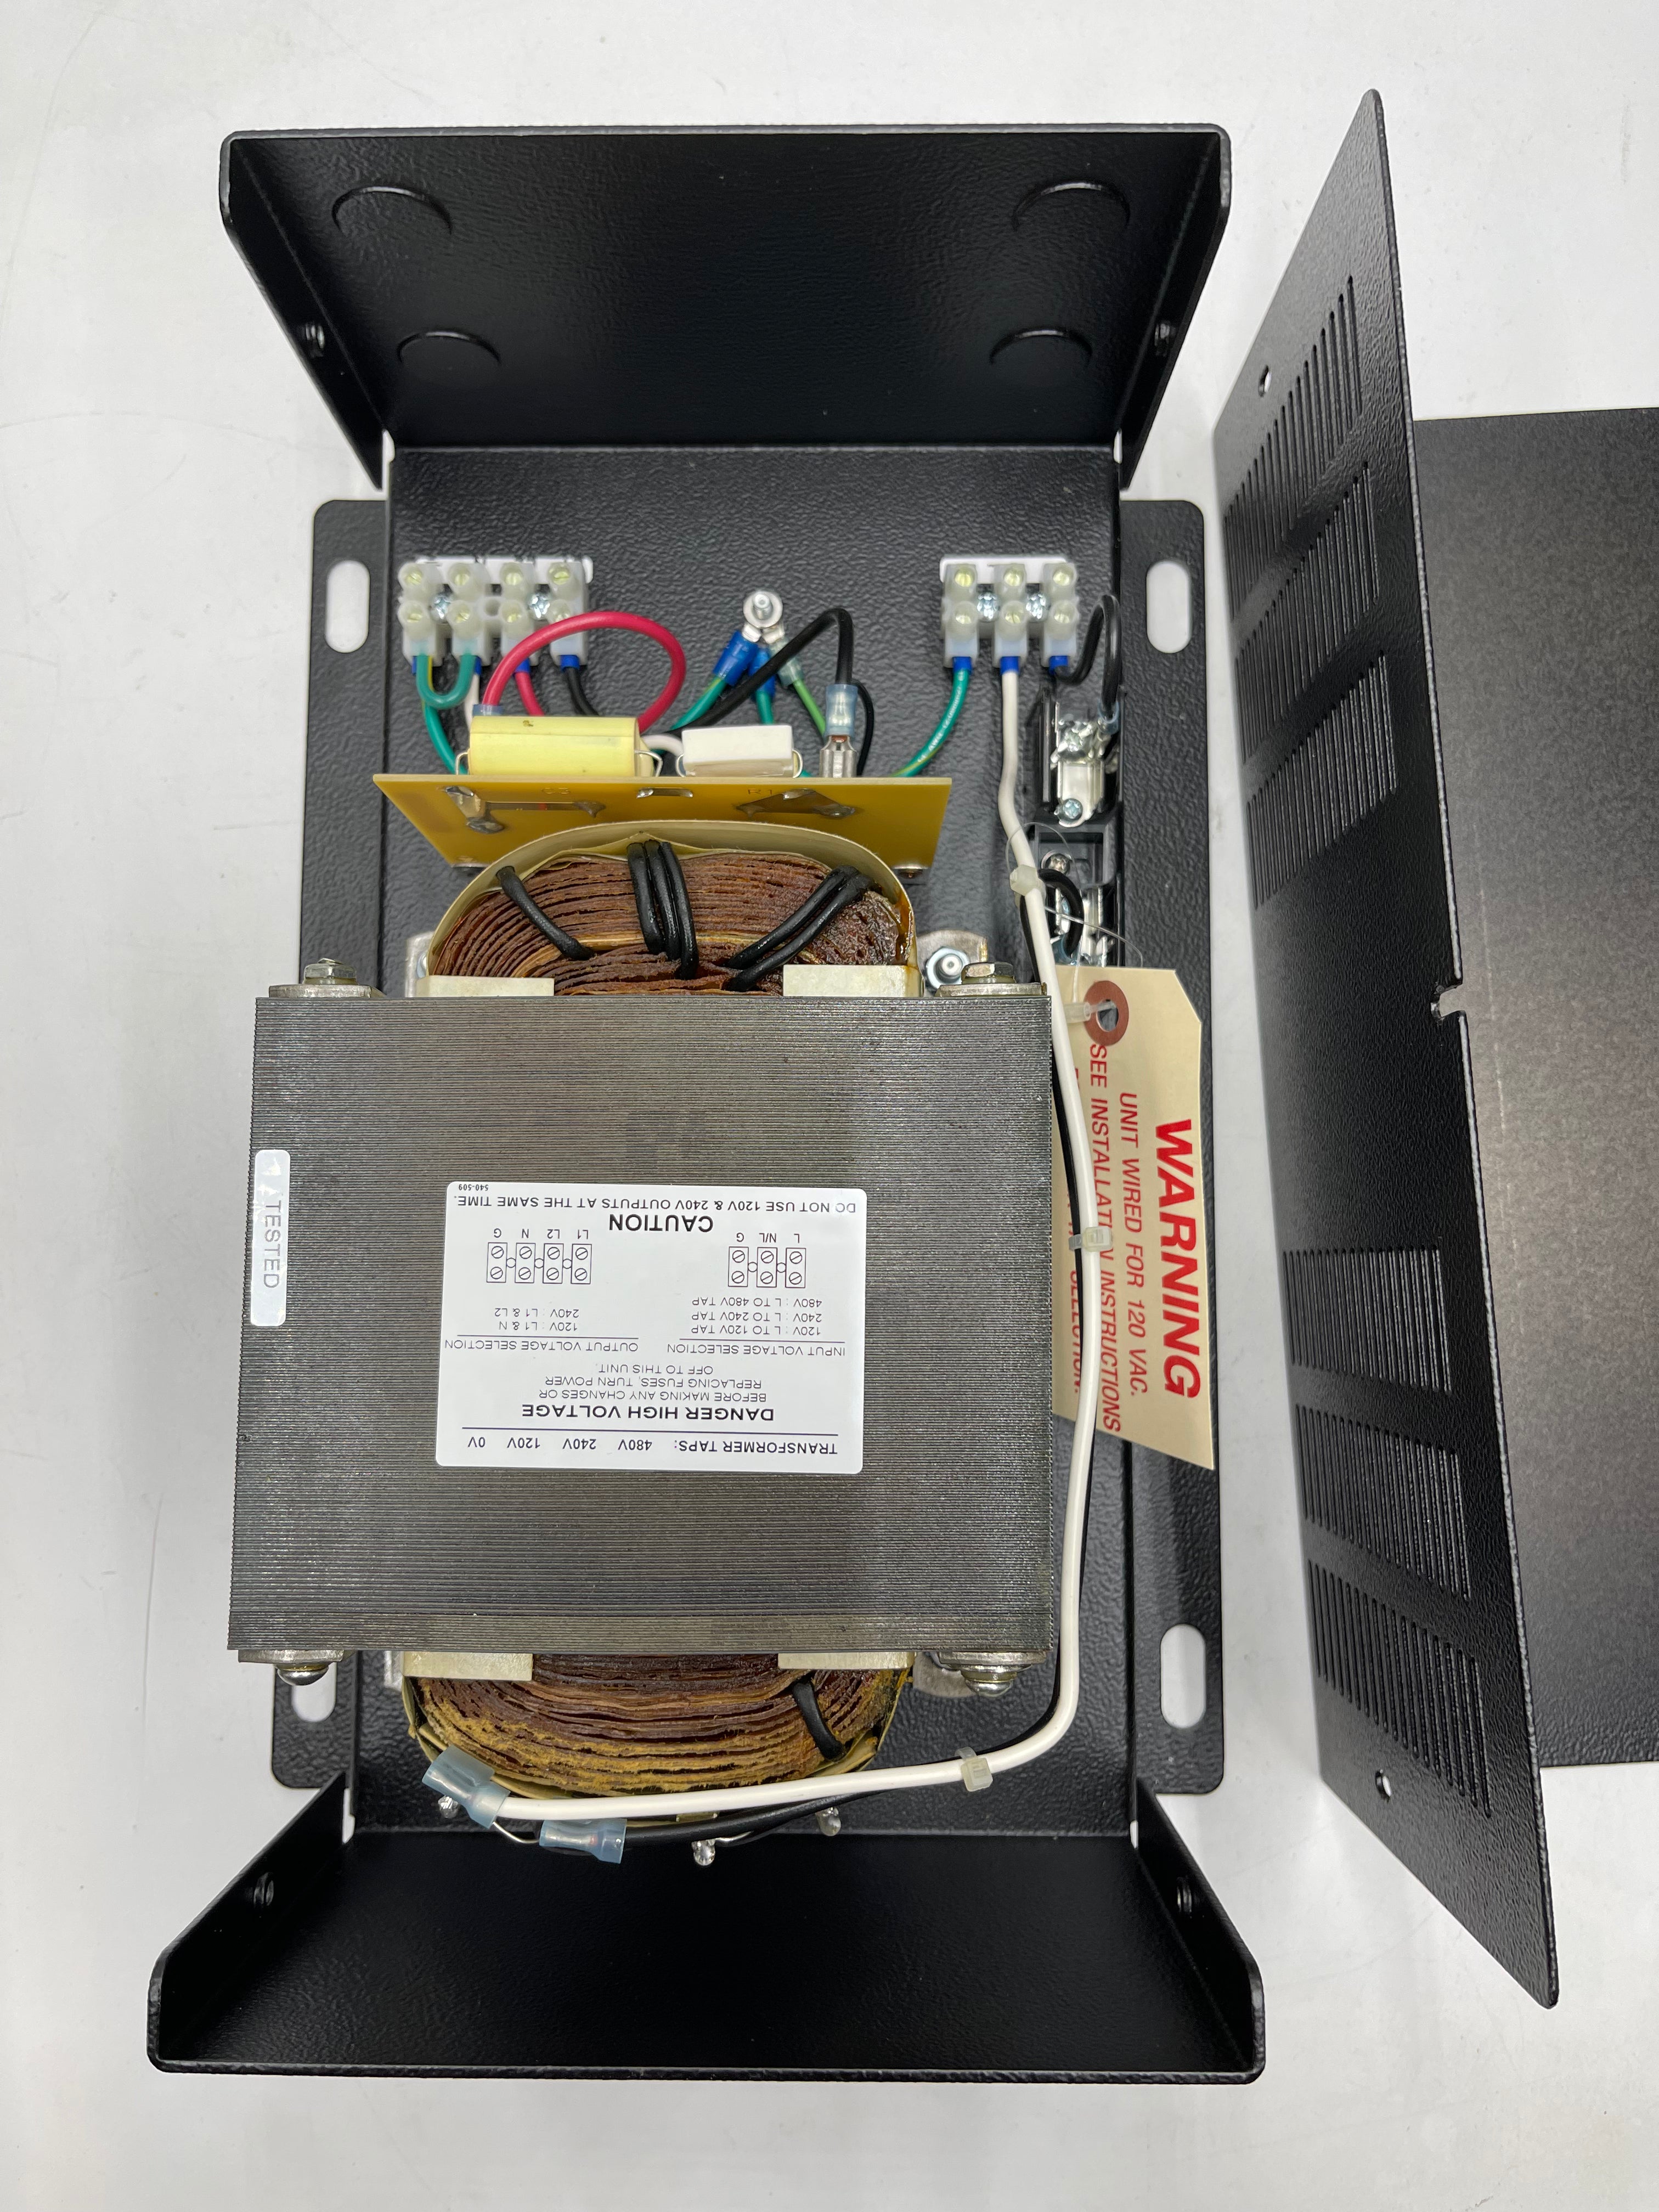 ONEAC CX1000 Power Conditioner Transformer